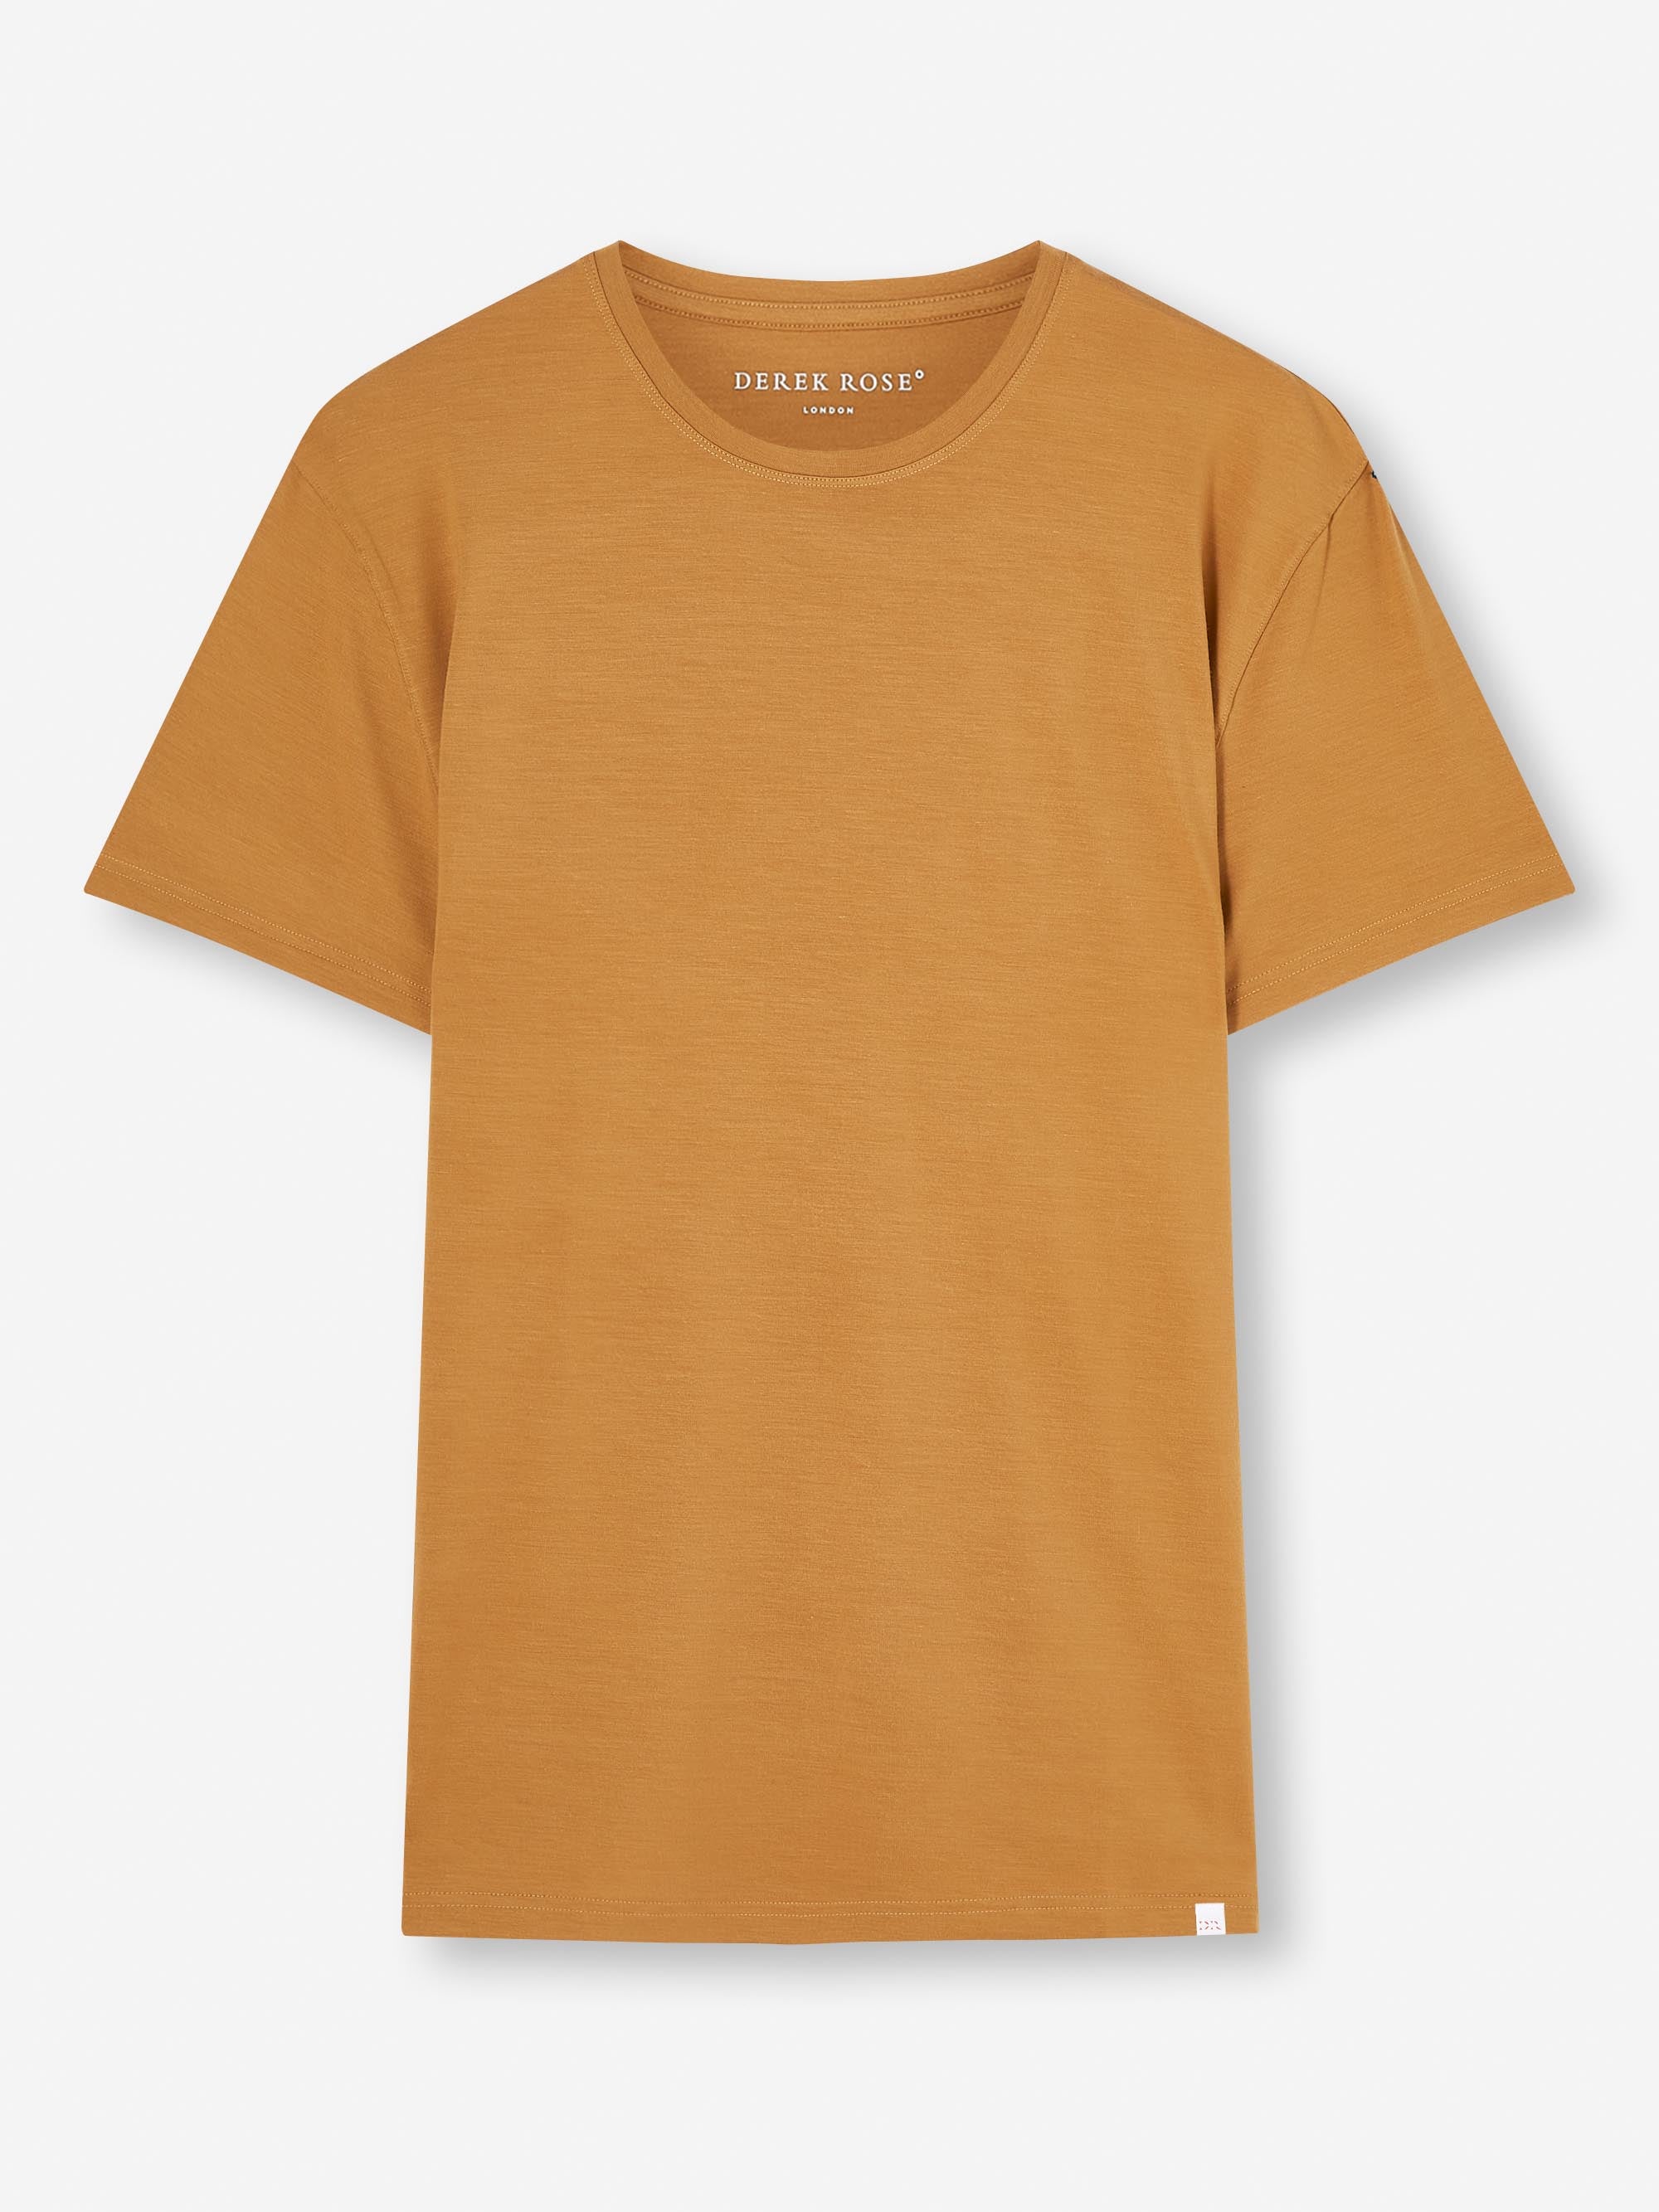 Men's T-Shirt Basel Micro Modal Stretch Gold